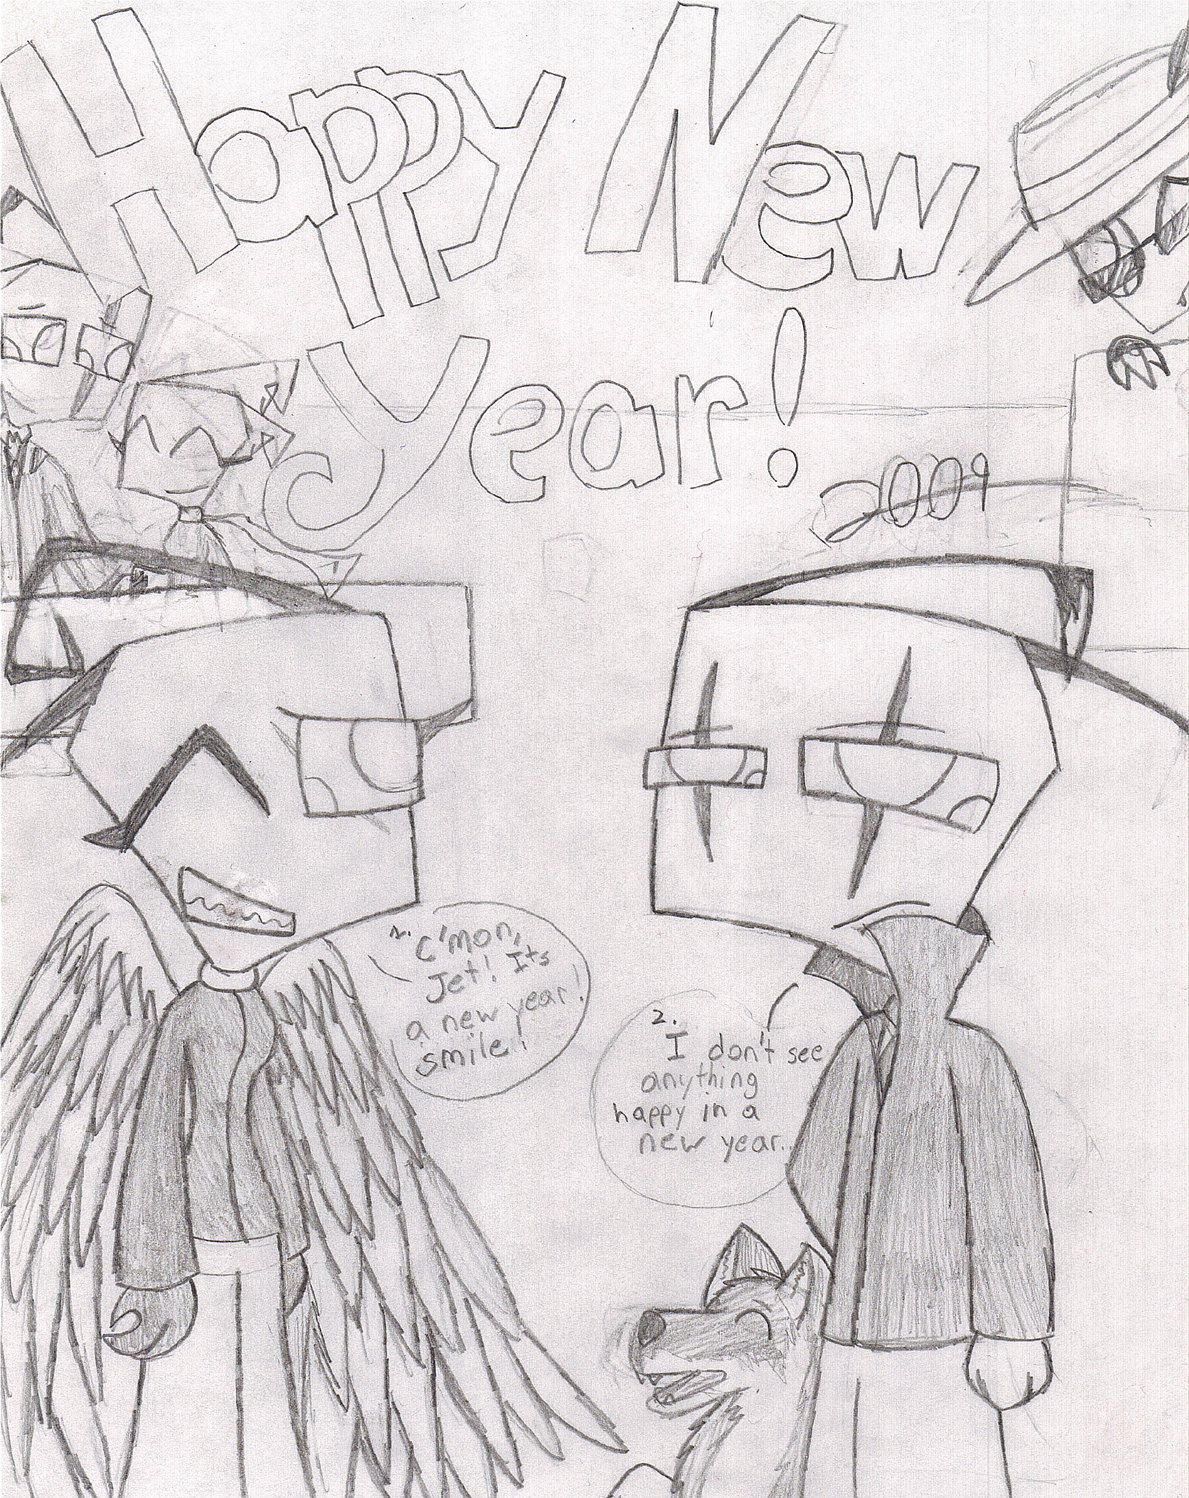 Happy New Years 2009 by CrystalKnight